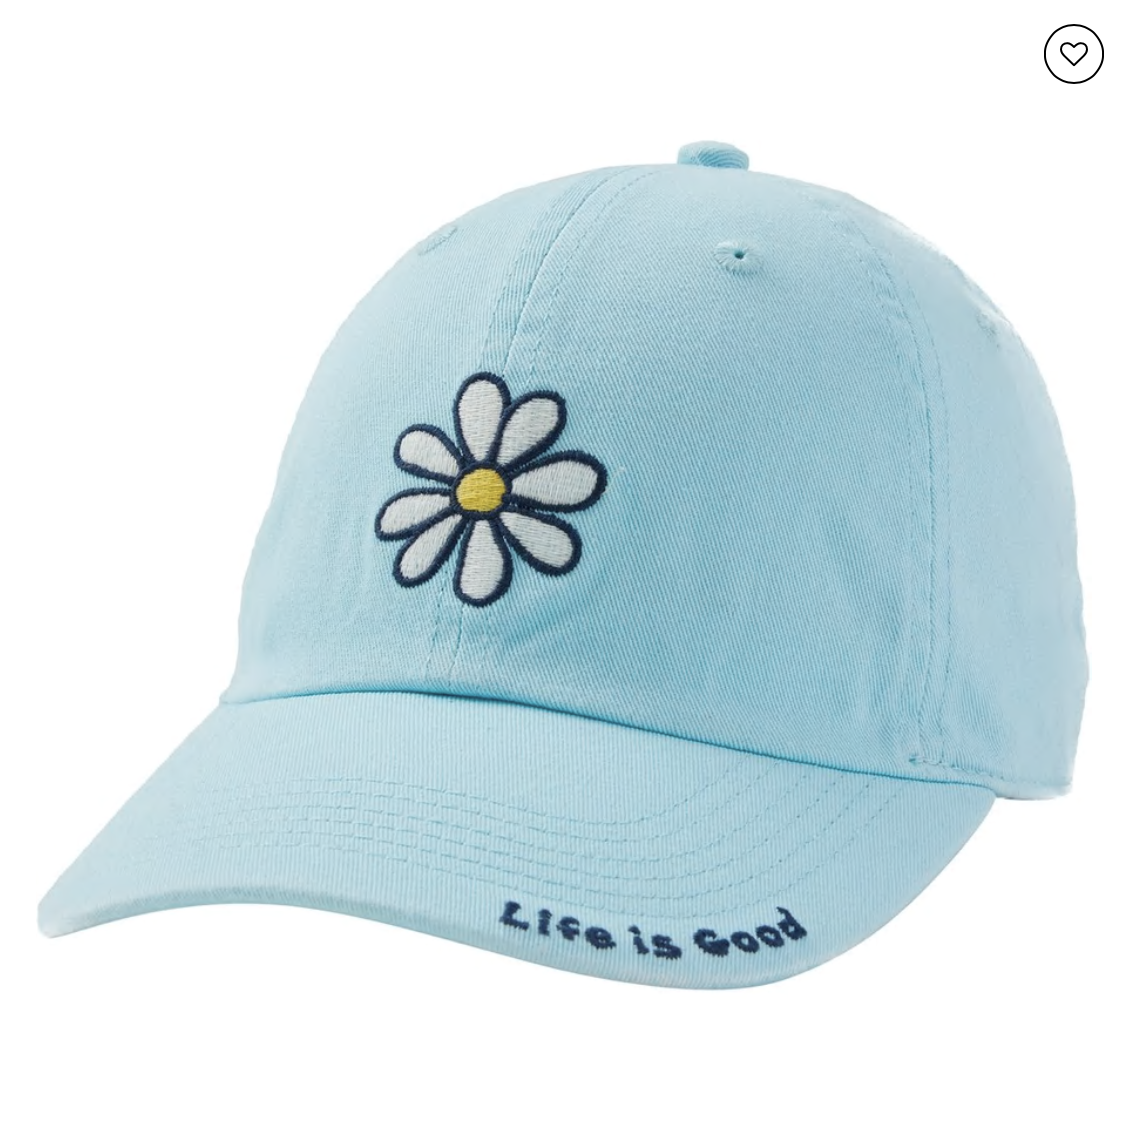 Bealls Life Is Good Daisy Embroidery Baseball Hat